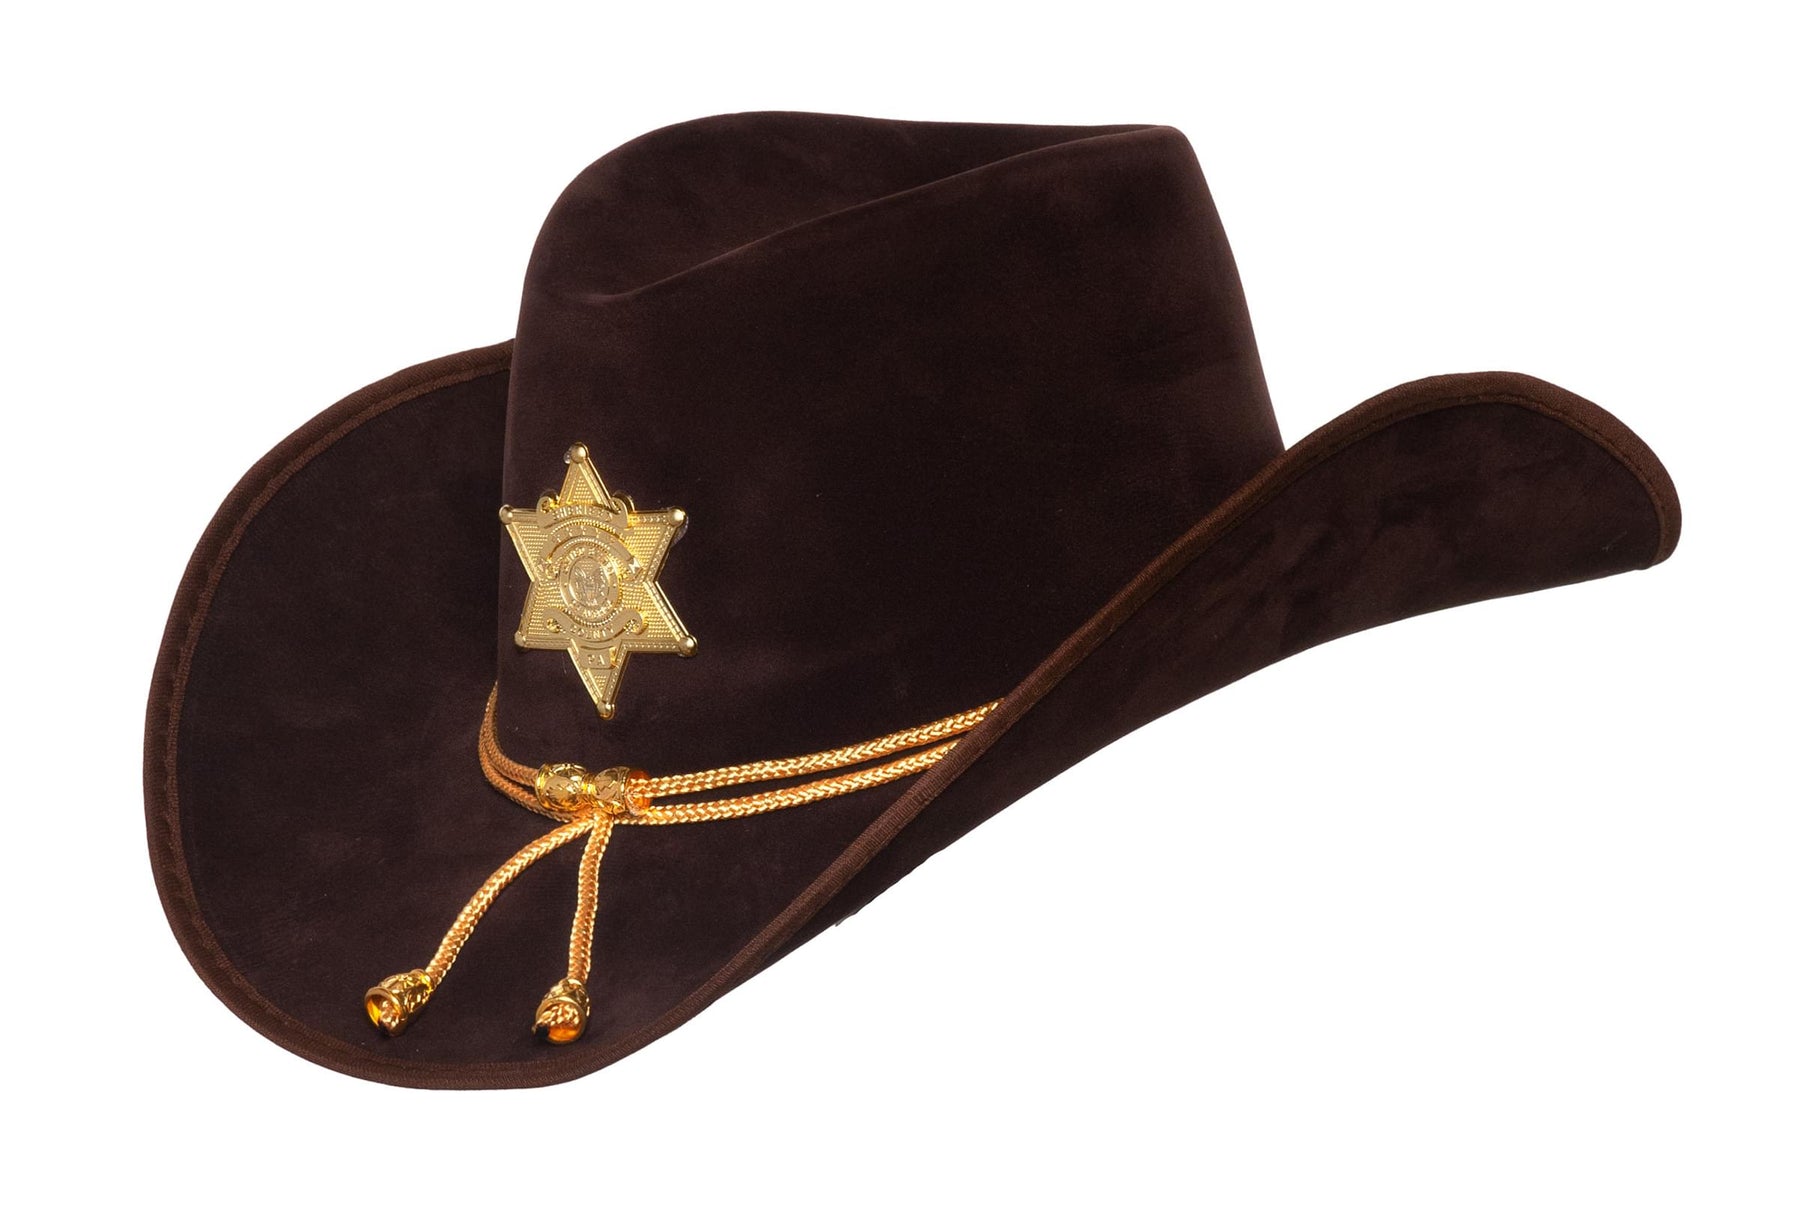 Sheriff Hat Adult Costume Accessory